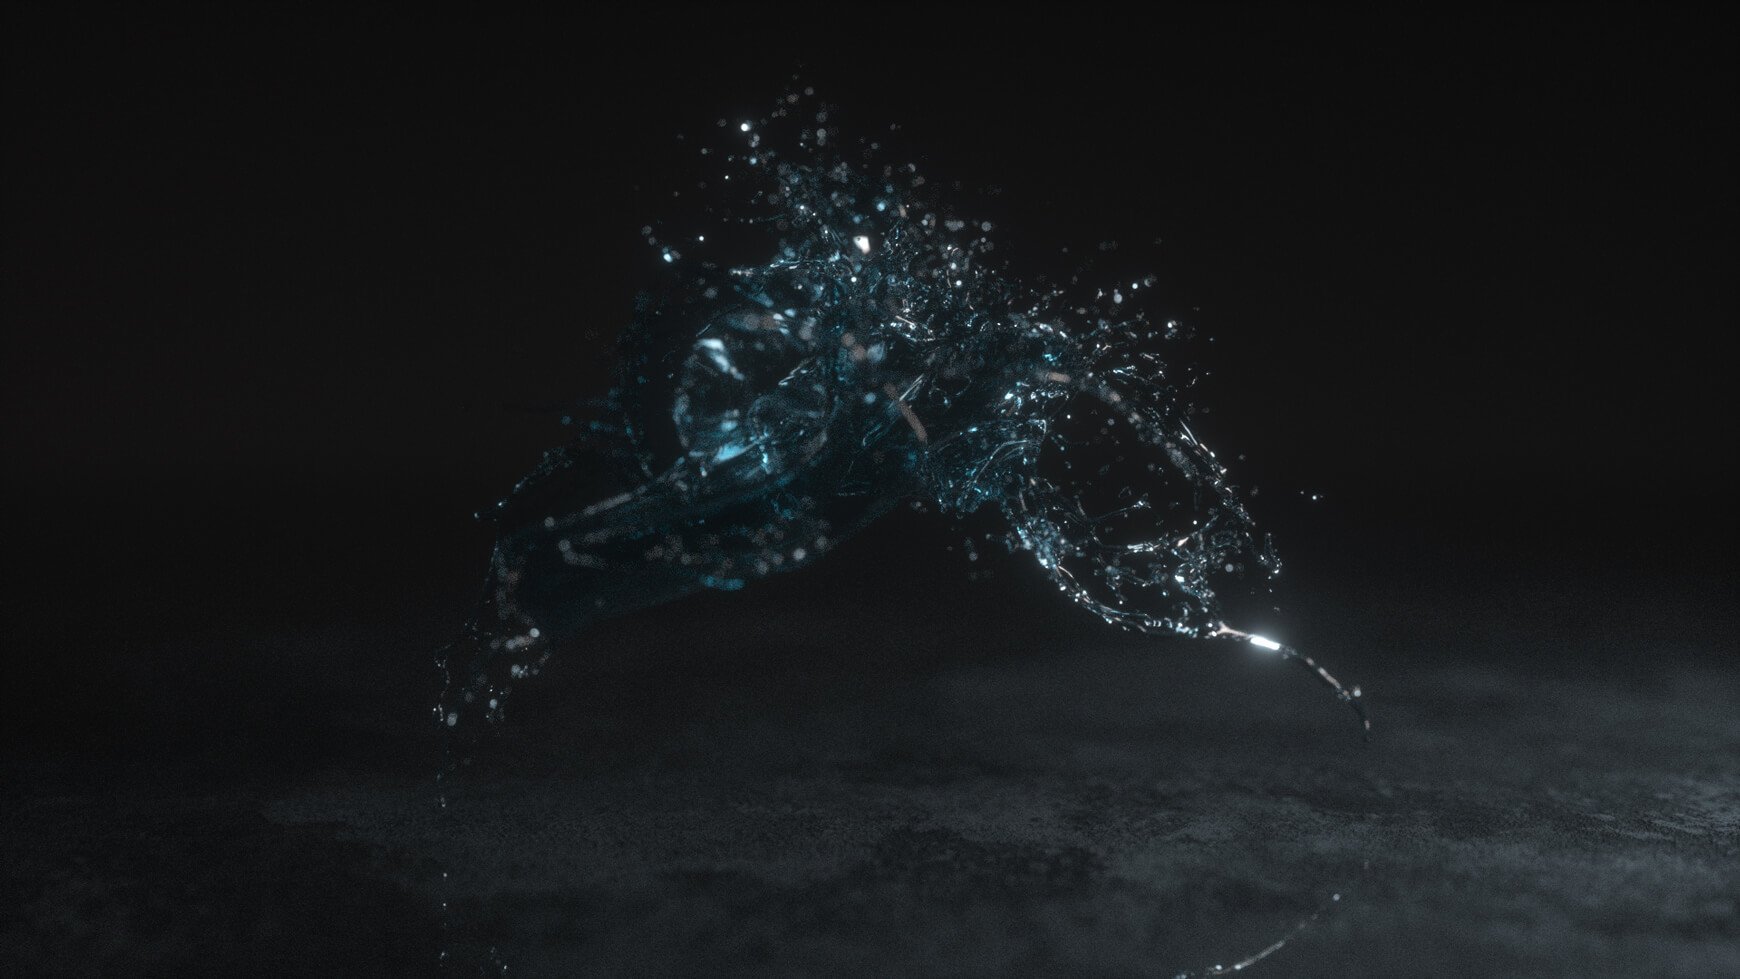 3D Water Splash Animation Fluid Effect 3 VFX